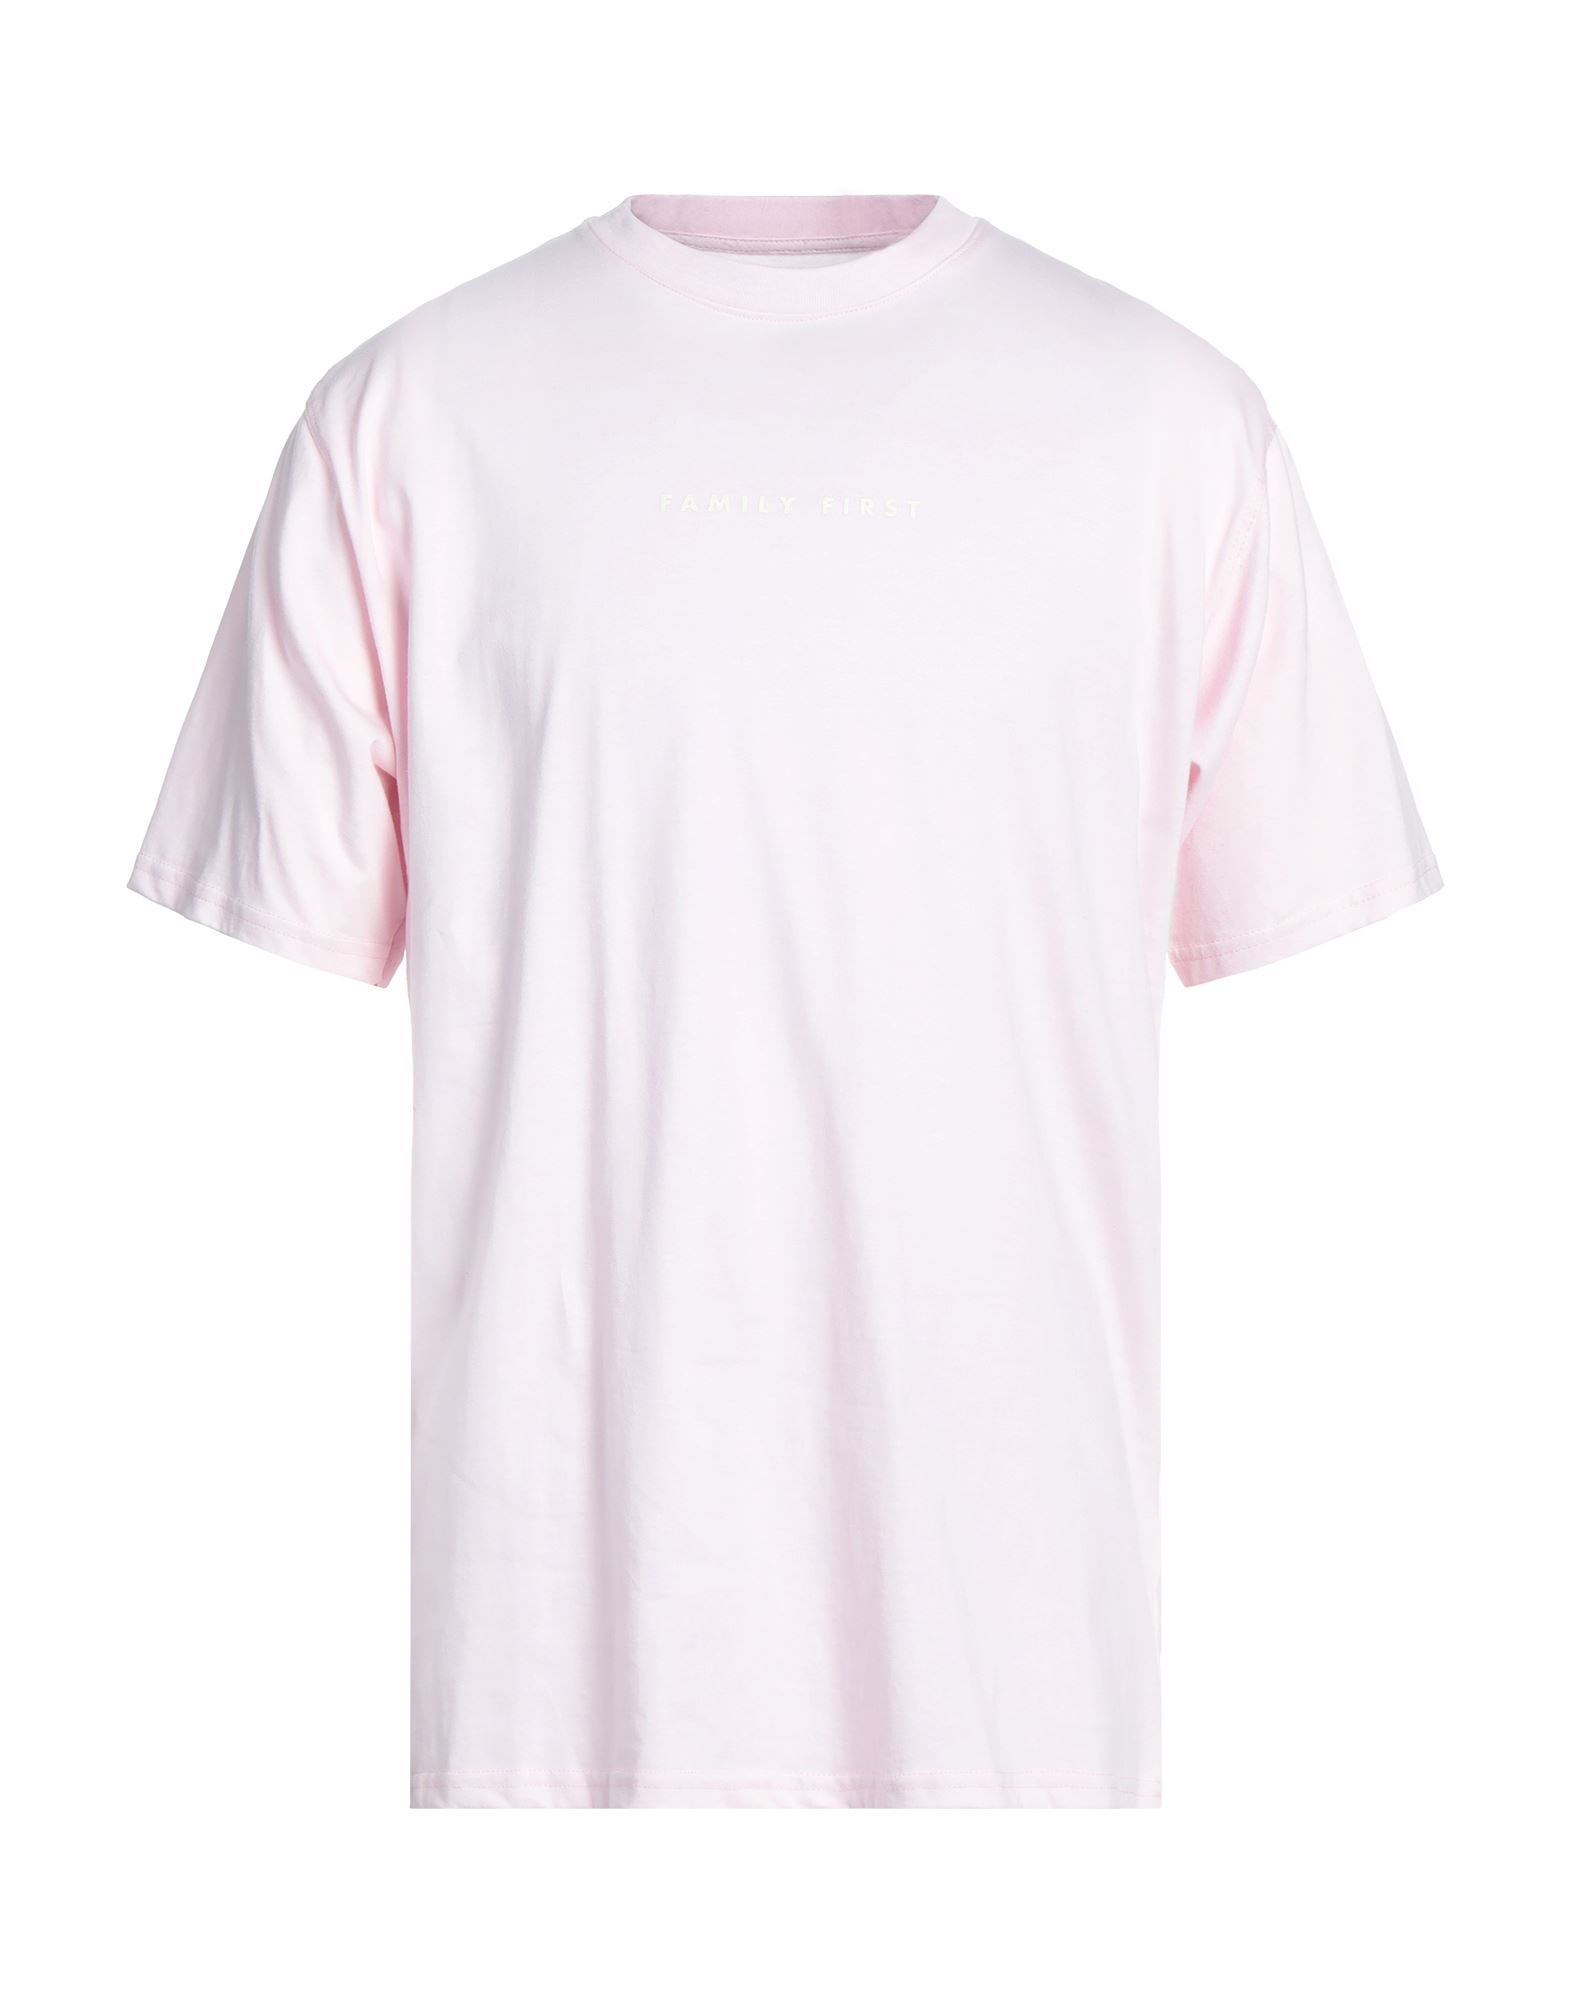 Family First Milano Man T-shirt Light Pink Size Xxl Cotton